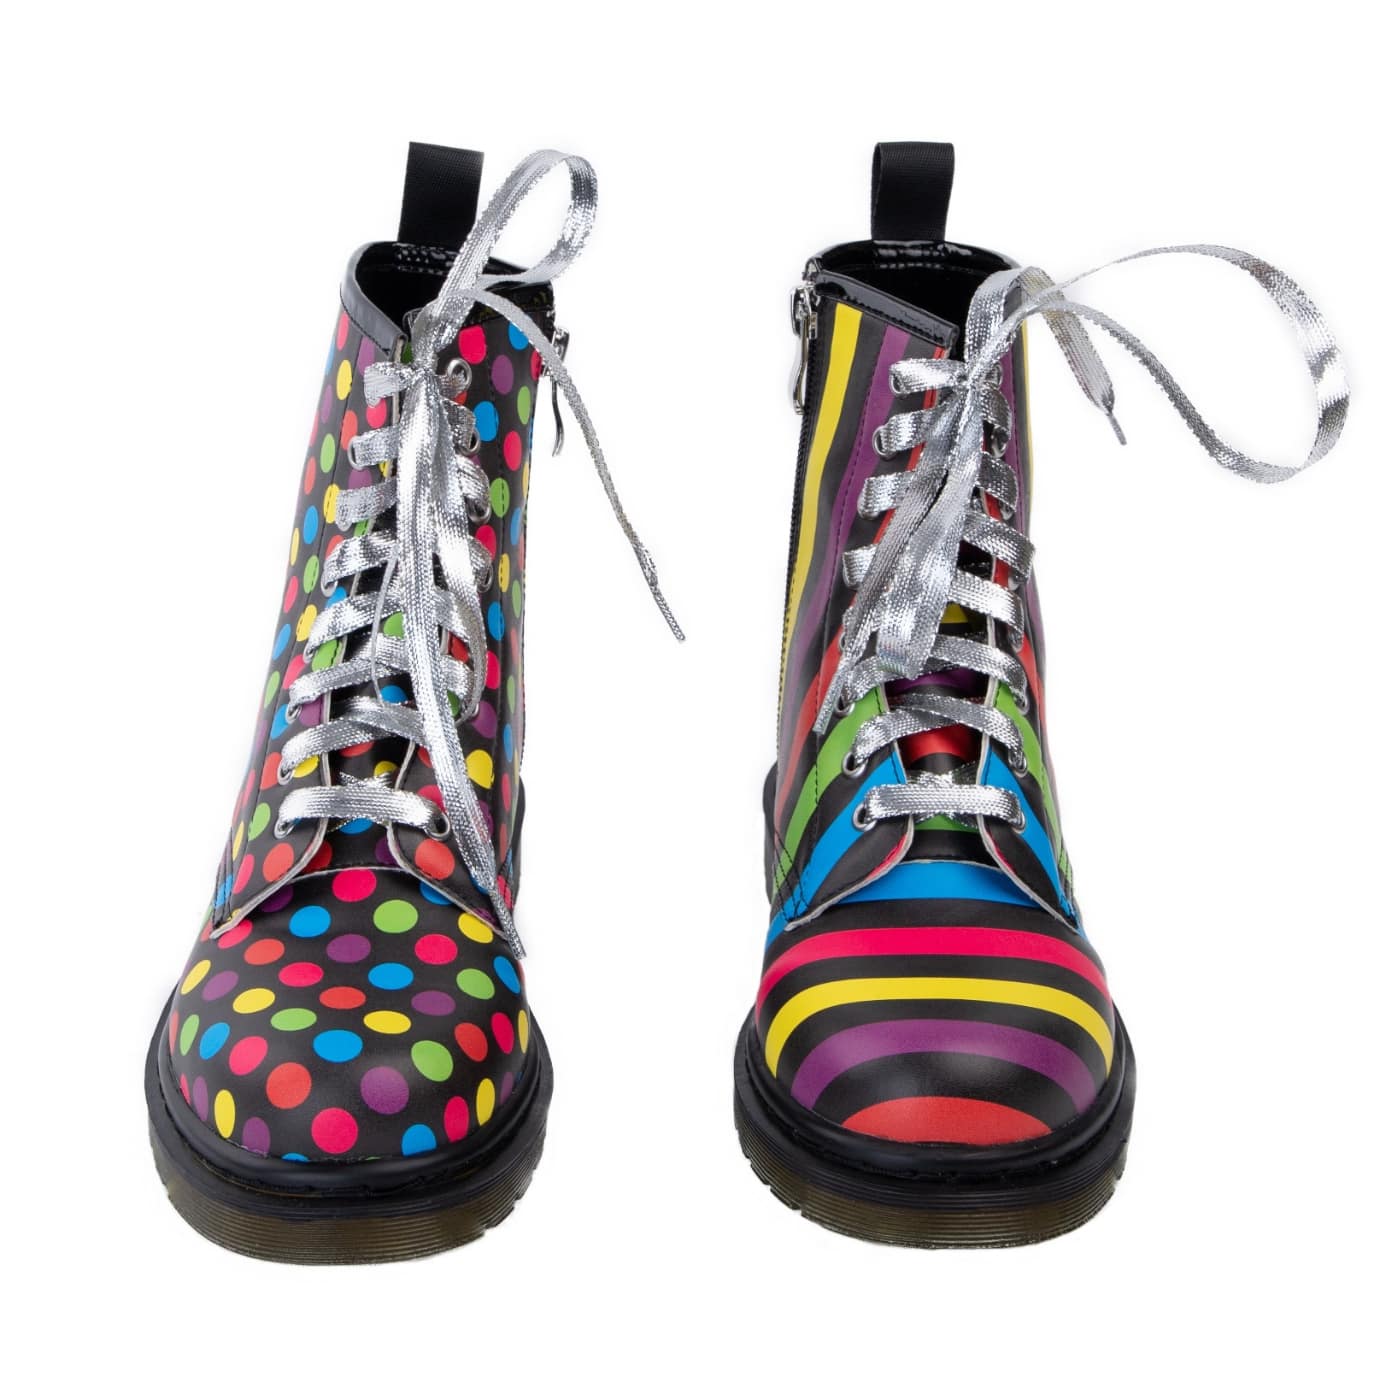 Confetti Wonder Boots by RainbowsAndFairies.com.au (Polka Dots - Rainbow Stripes - Combat Boots - Mismatched Shoes - Side Zip Boots) - SKU: FW_WONDR_CONFT_ORG - Pic-04